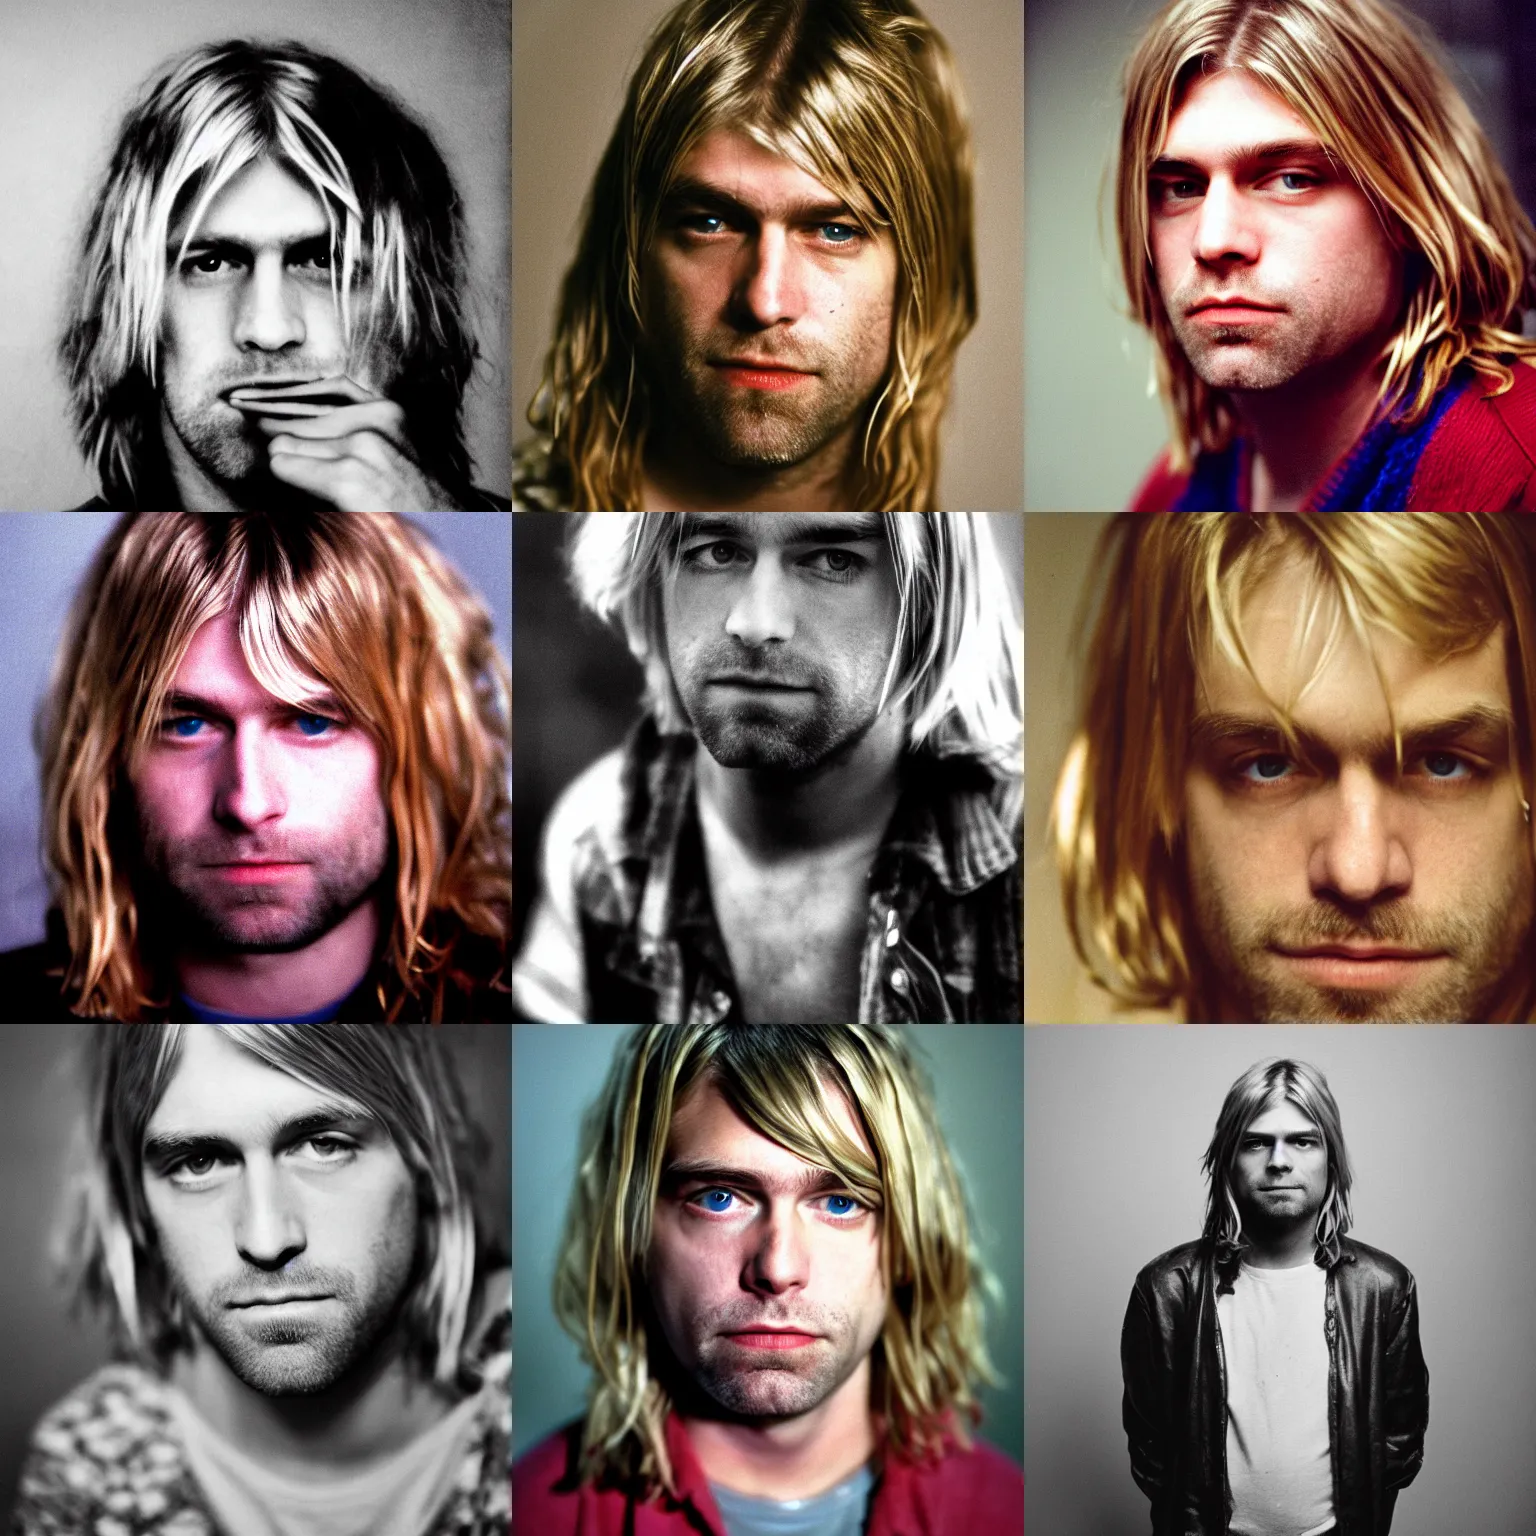 Prompt: photo portrait of Kurt Cobain as best ager model by Jim Rakete, sharp focus, directed light, award winning portrait